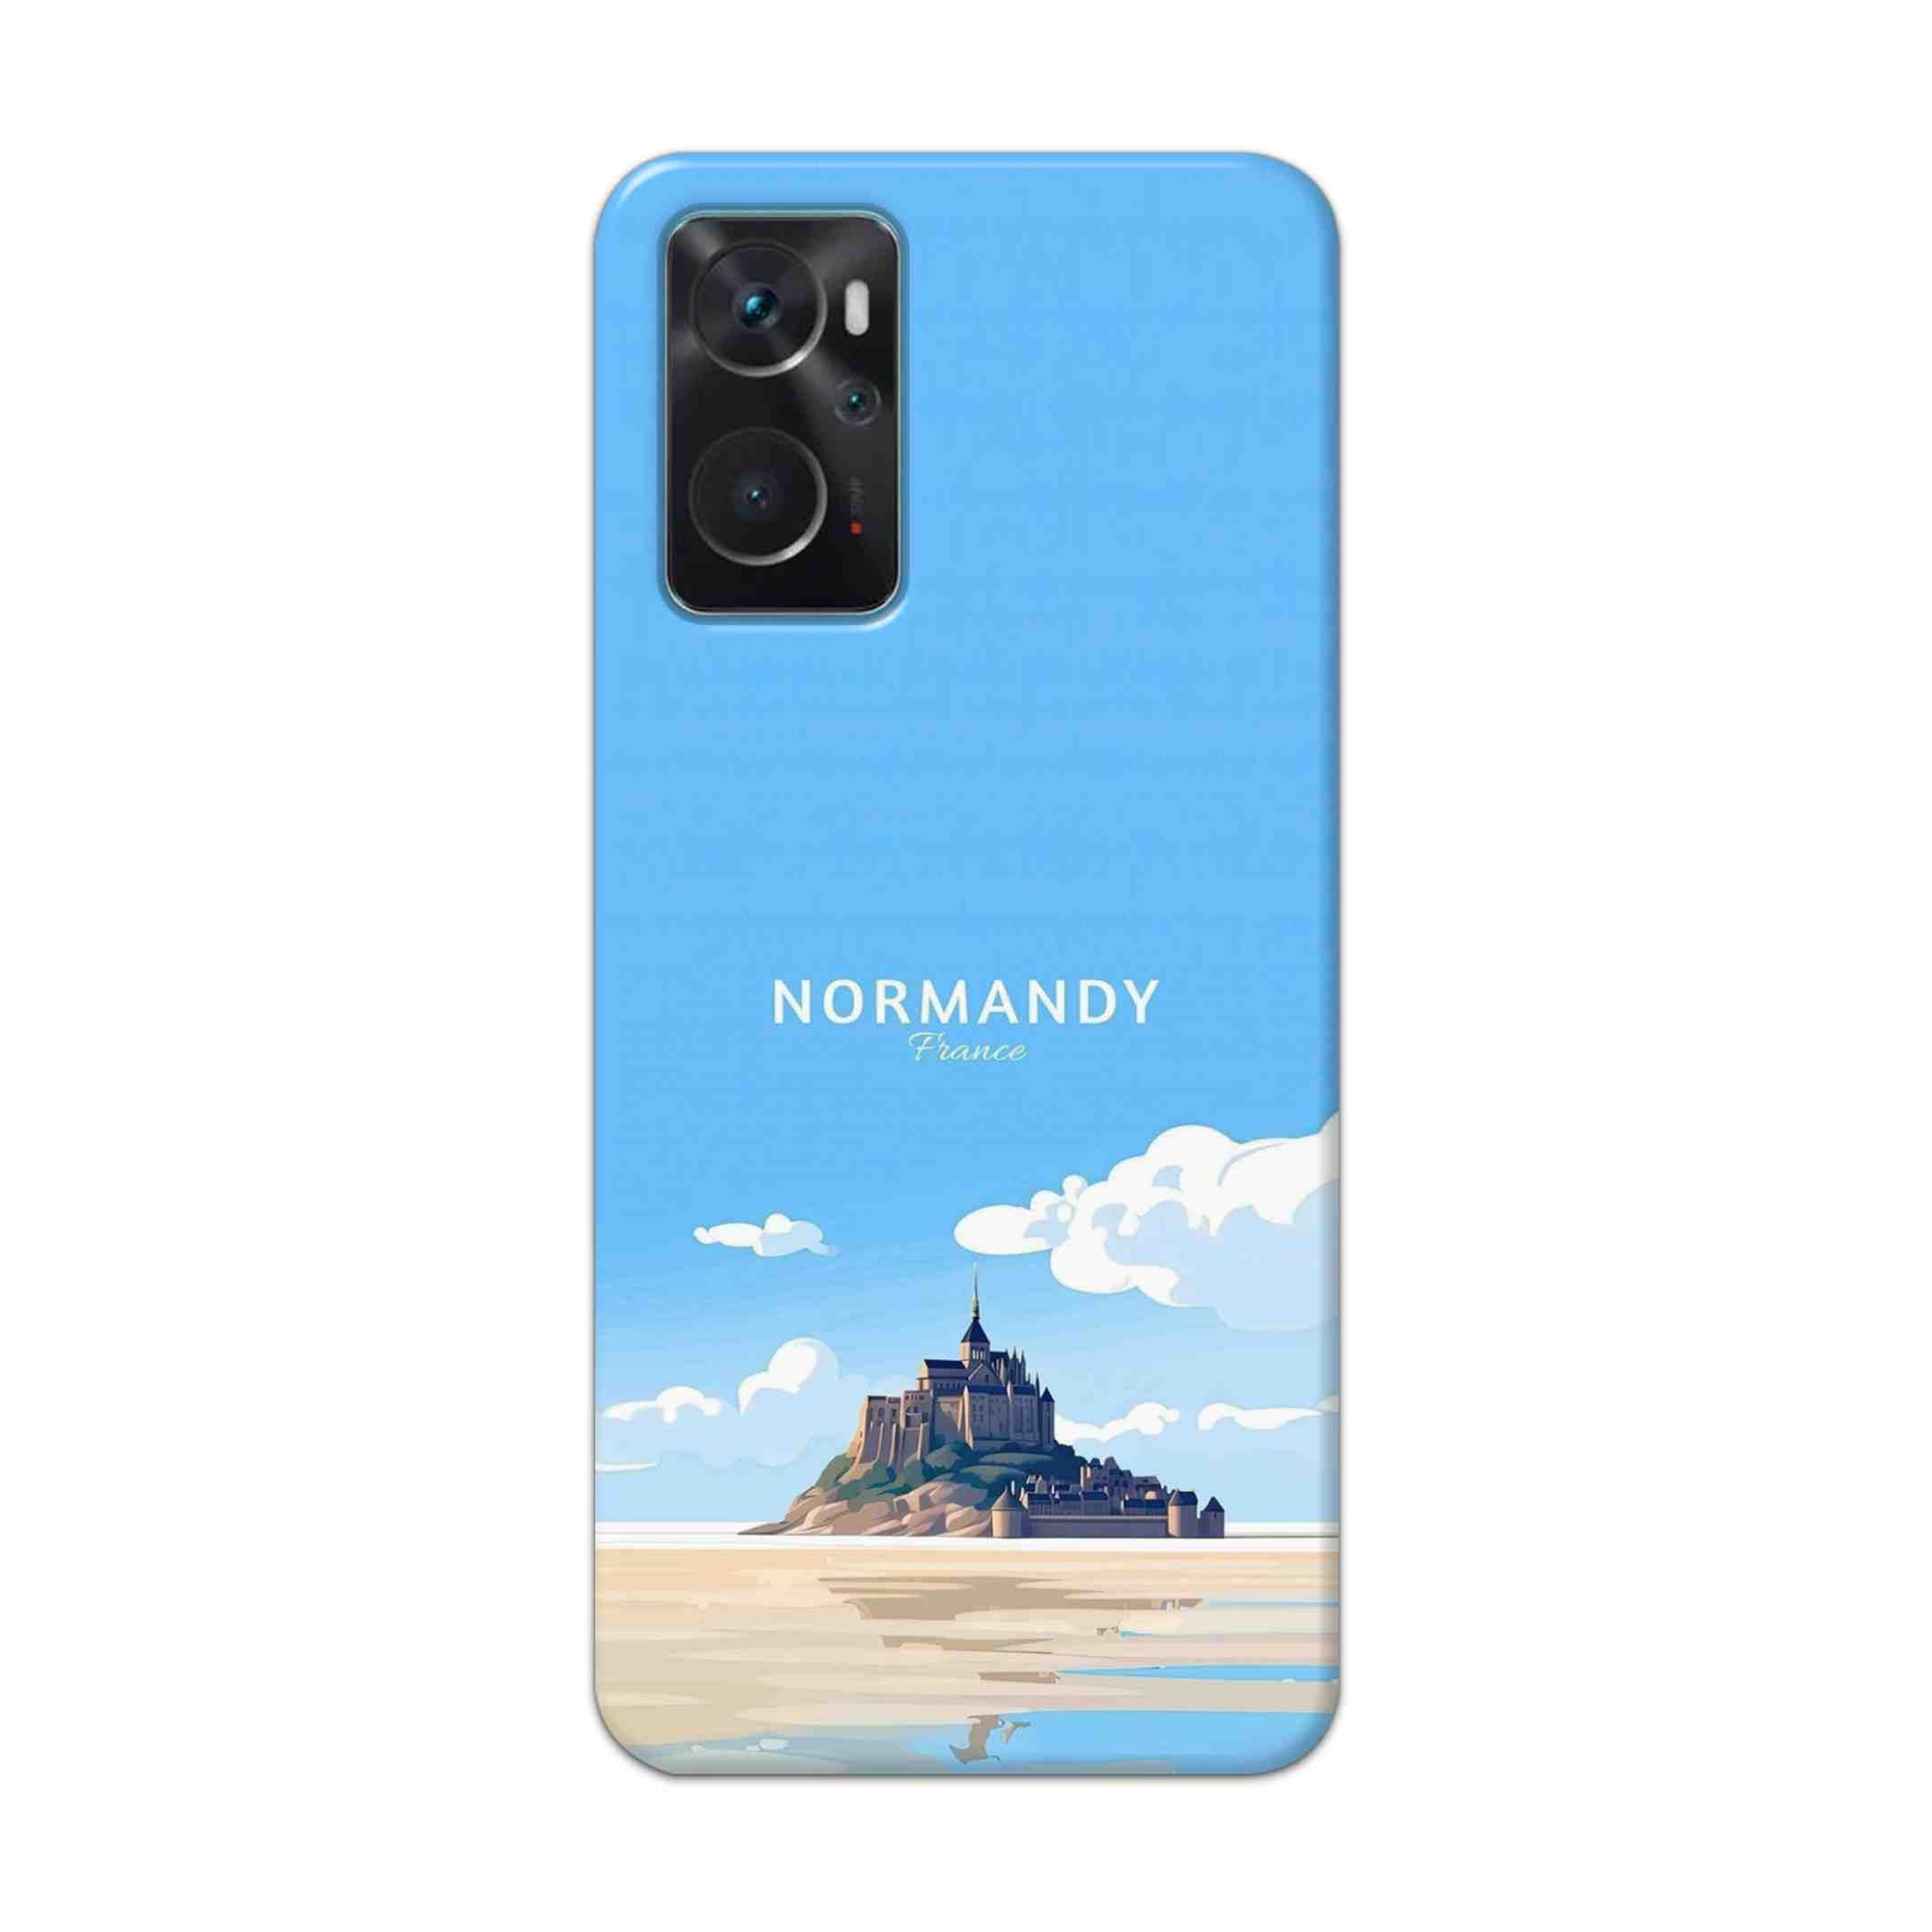 Buy Normandy Hard Back Mobile Phone Case Cover For Oppo K10 Online